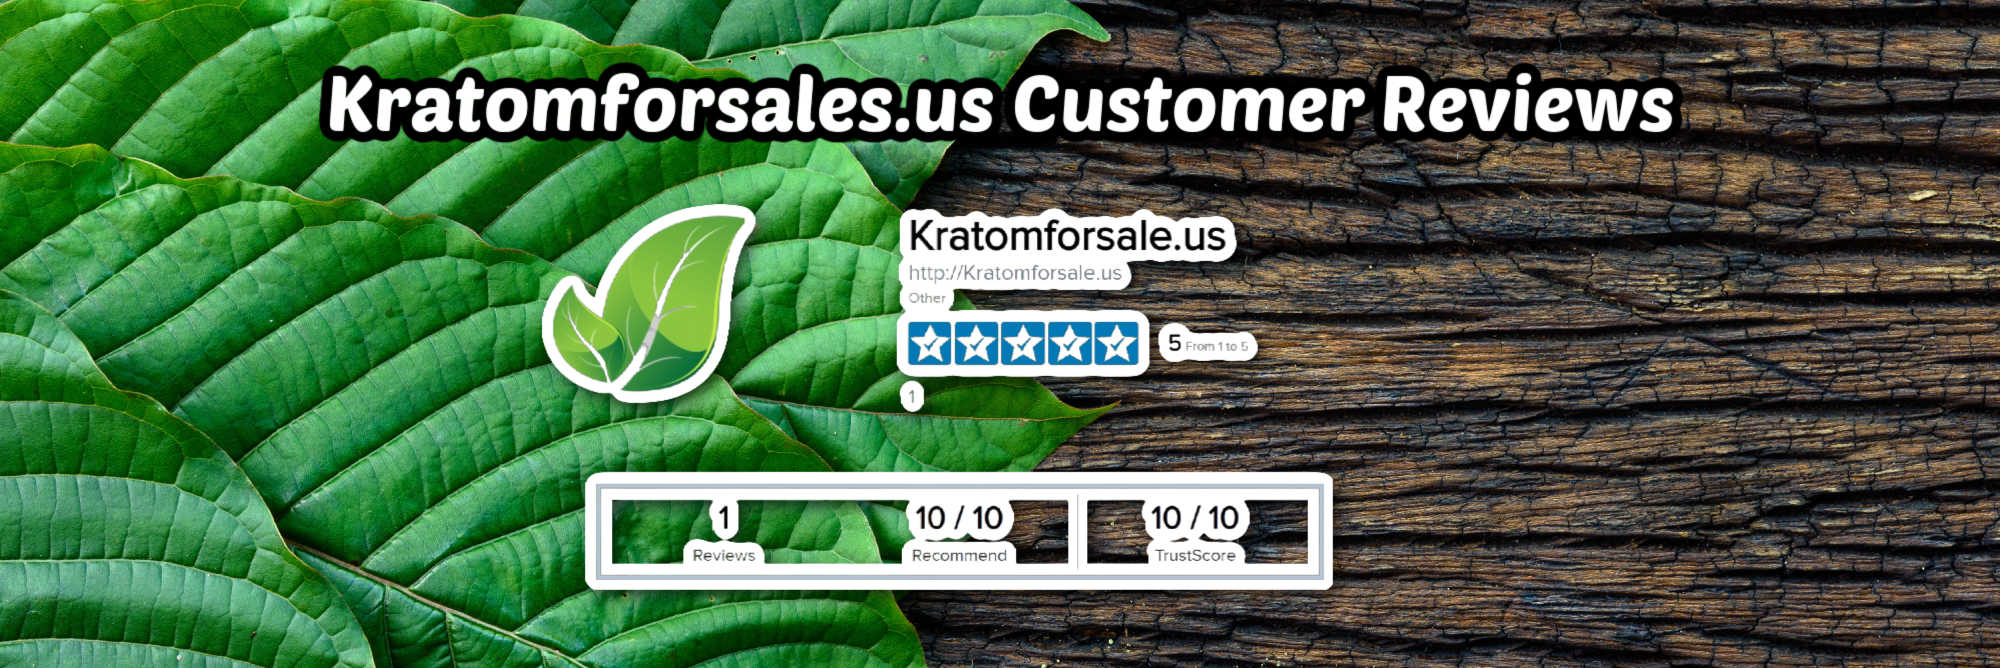 image of kratomforsale.us customer reviews